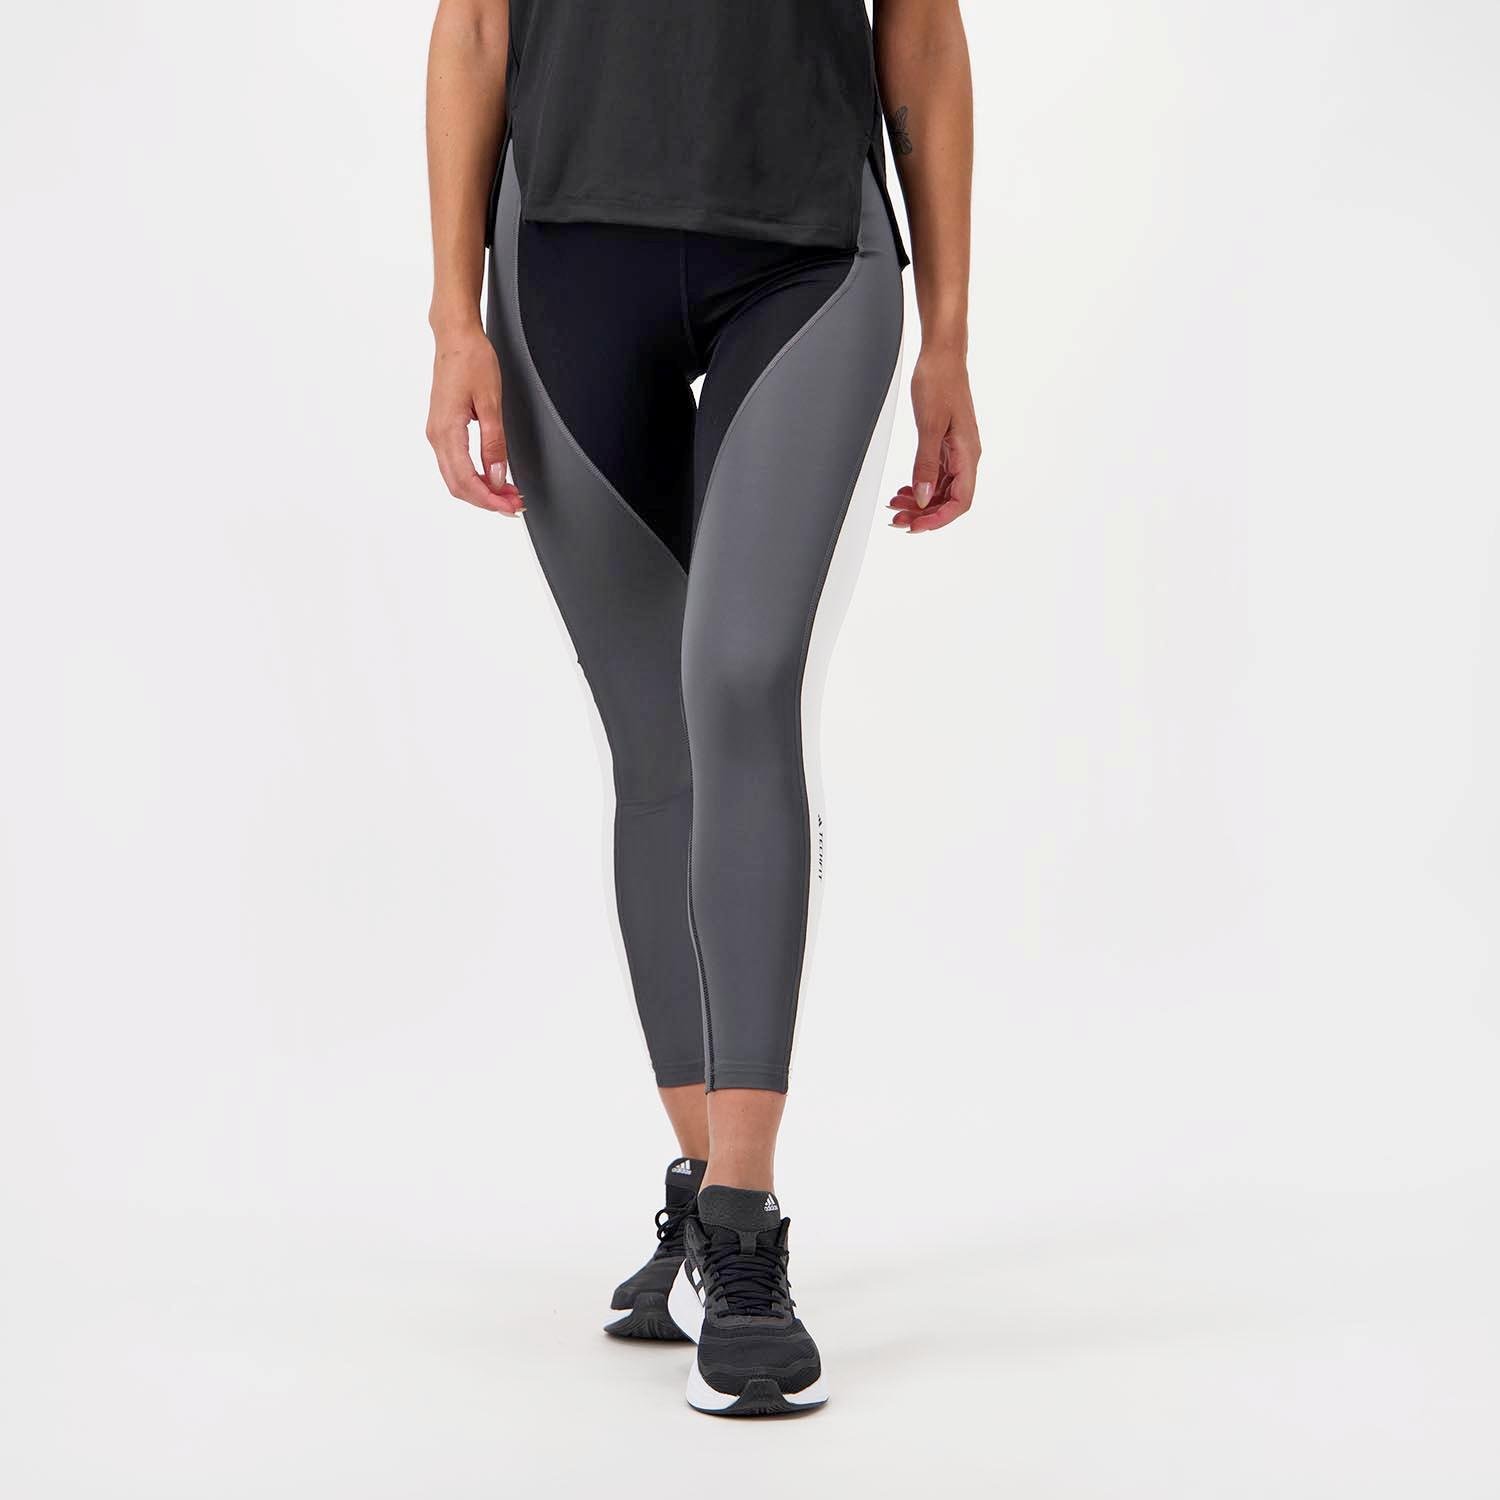 https://static.sprintercdn.com/products/0352968/leggings-adidas_0352968_00_4_890111151.jpg